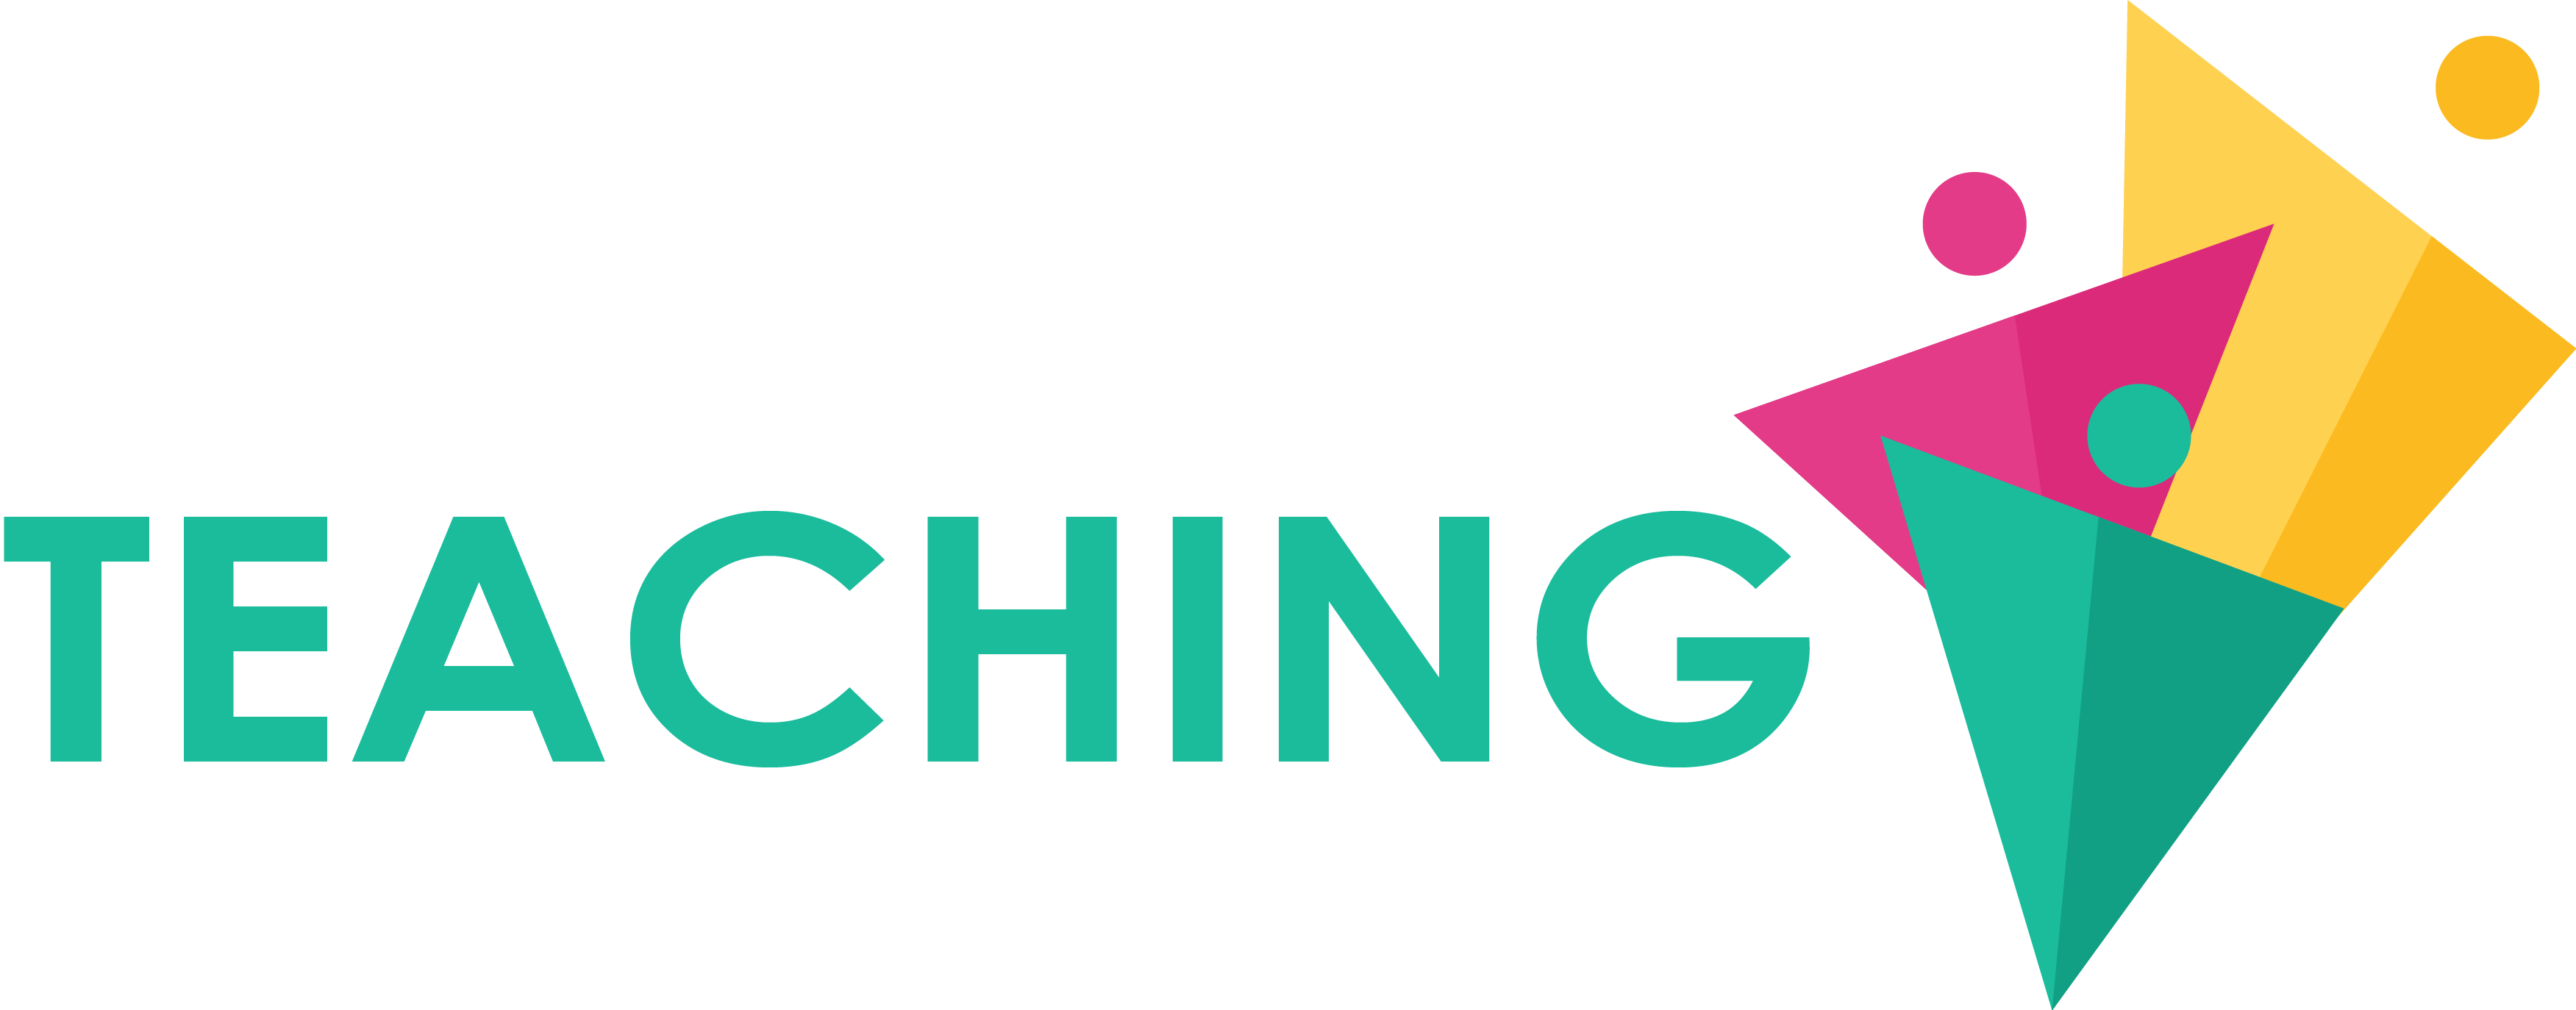 Teaching Logo - Teaching Side By Side